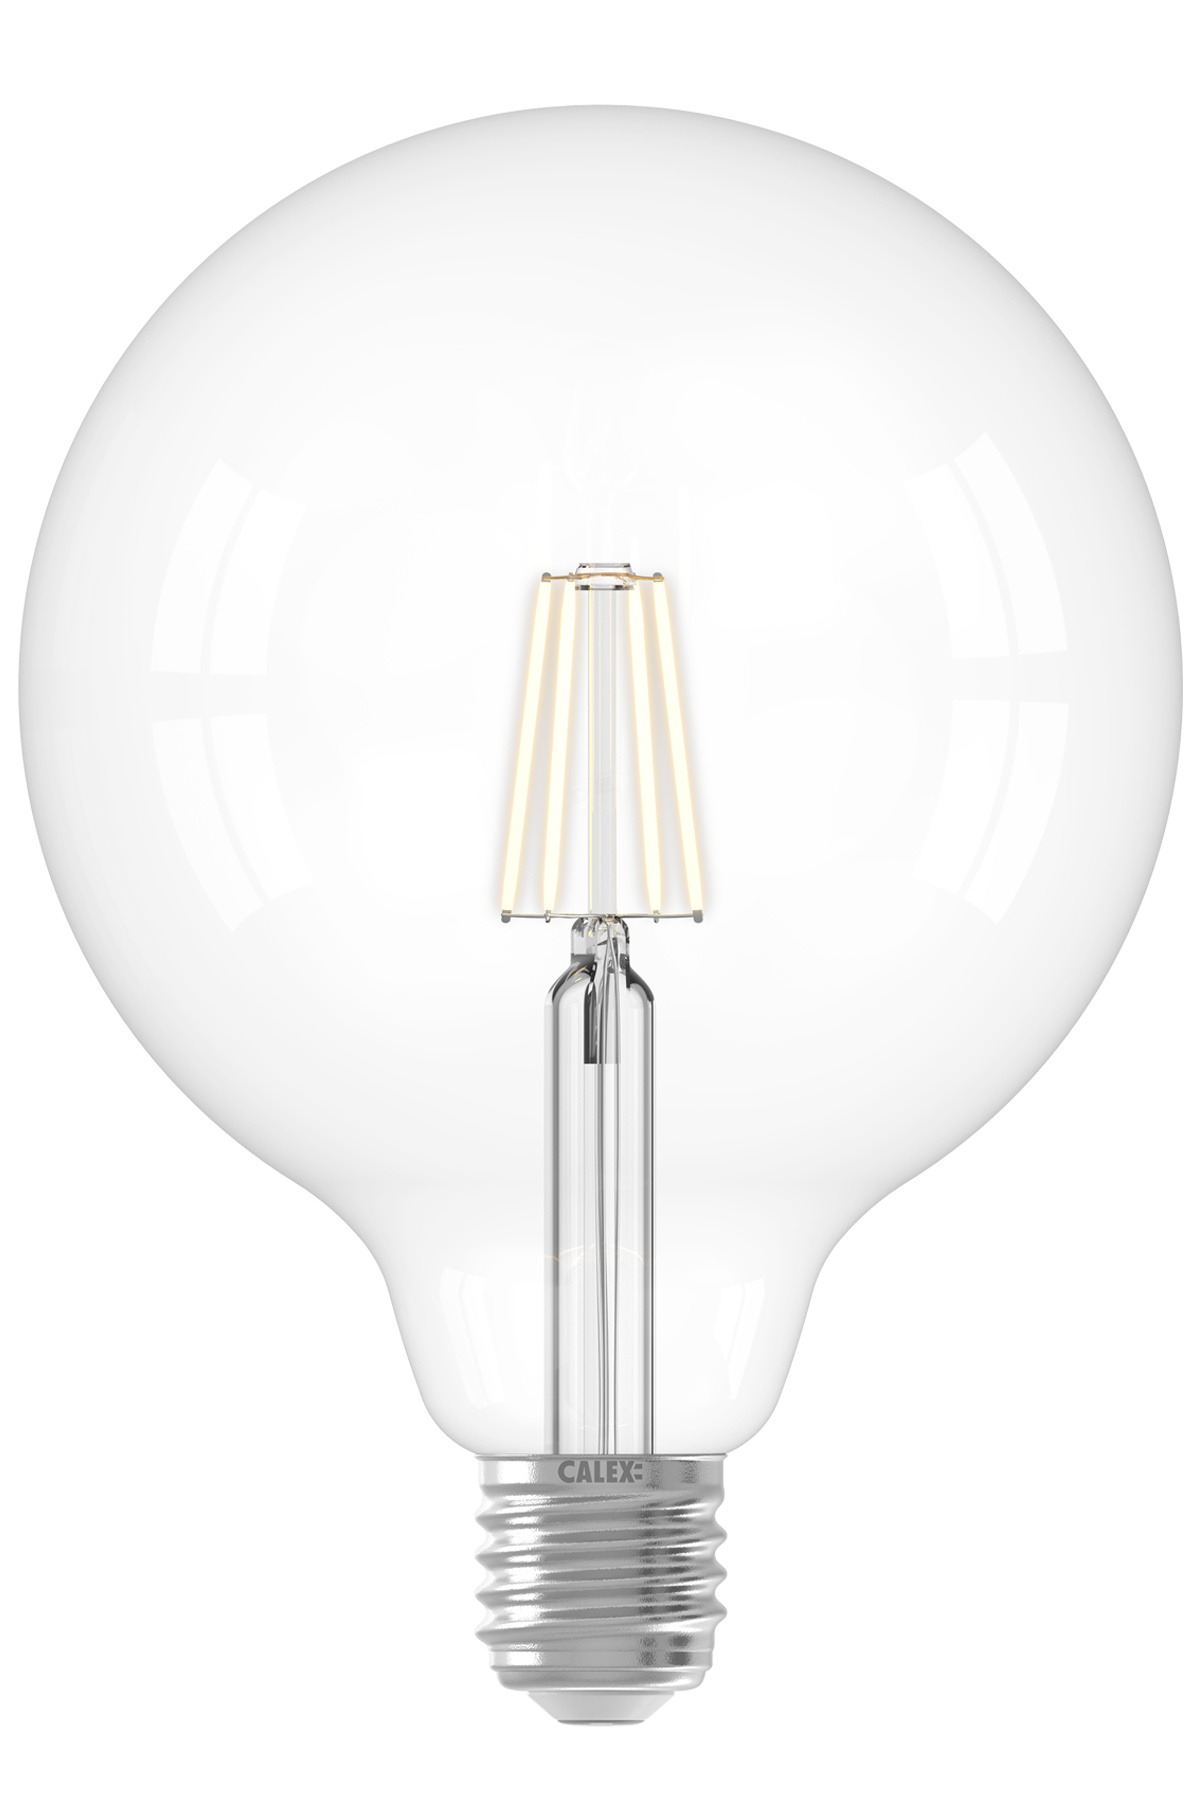 Atlas Heb geleerd over het algemeen LED lamp globe Calex helder (G125 Ø125mm E27) - Kynda Light